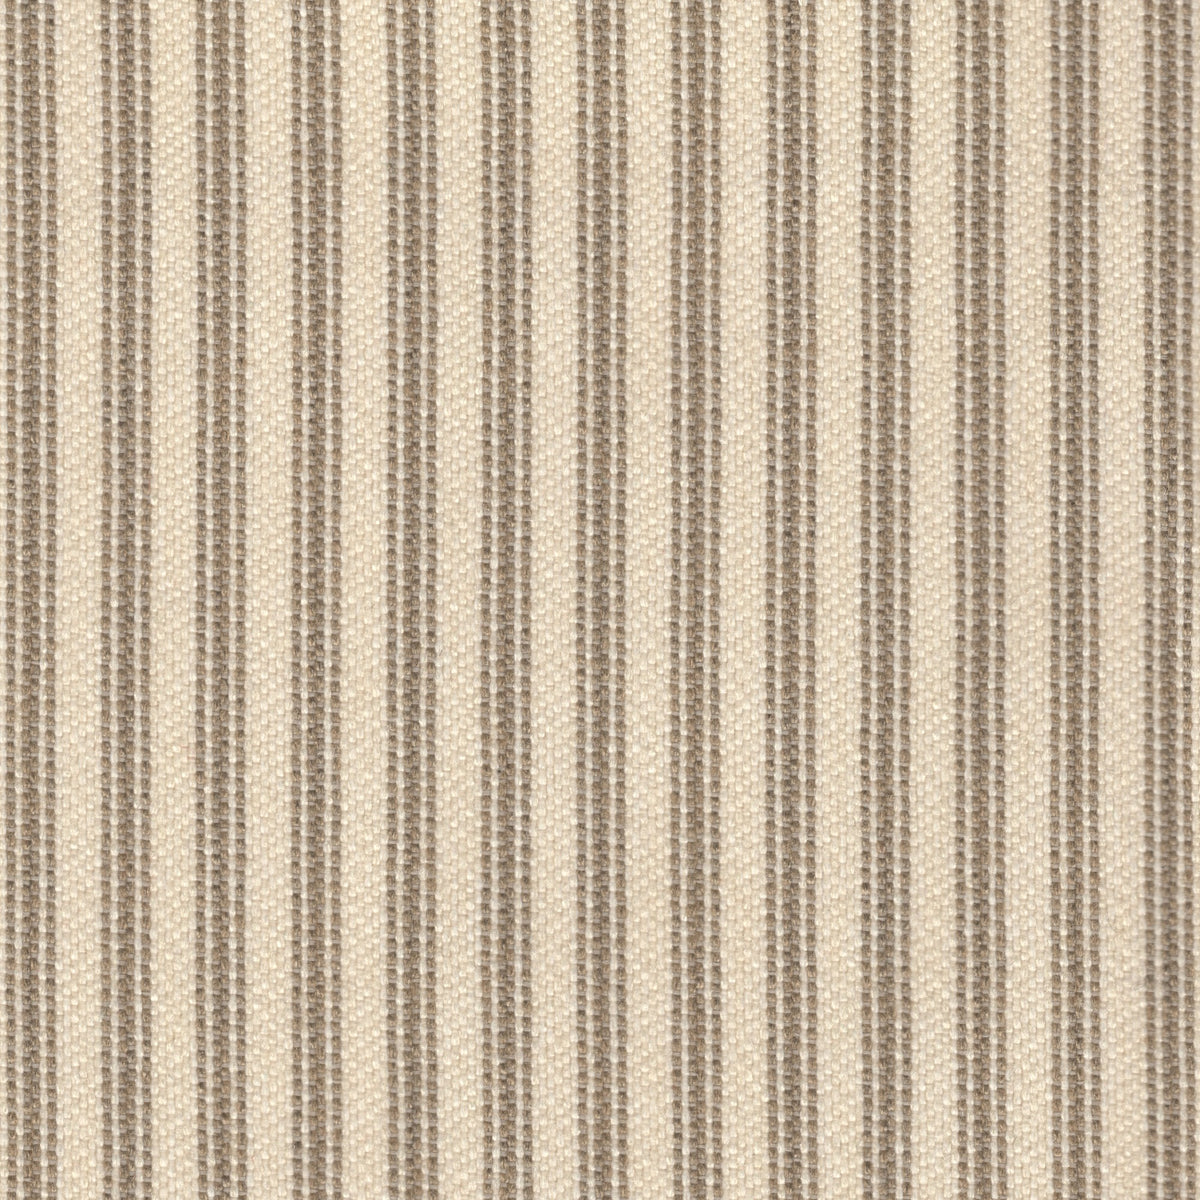 RTC Fabric 100% Cotton 44 Wide Ticking Stripe Khaki Fabric by the Yard